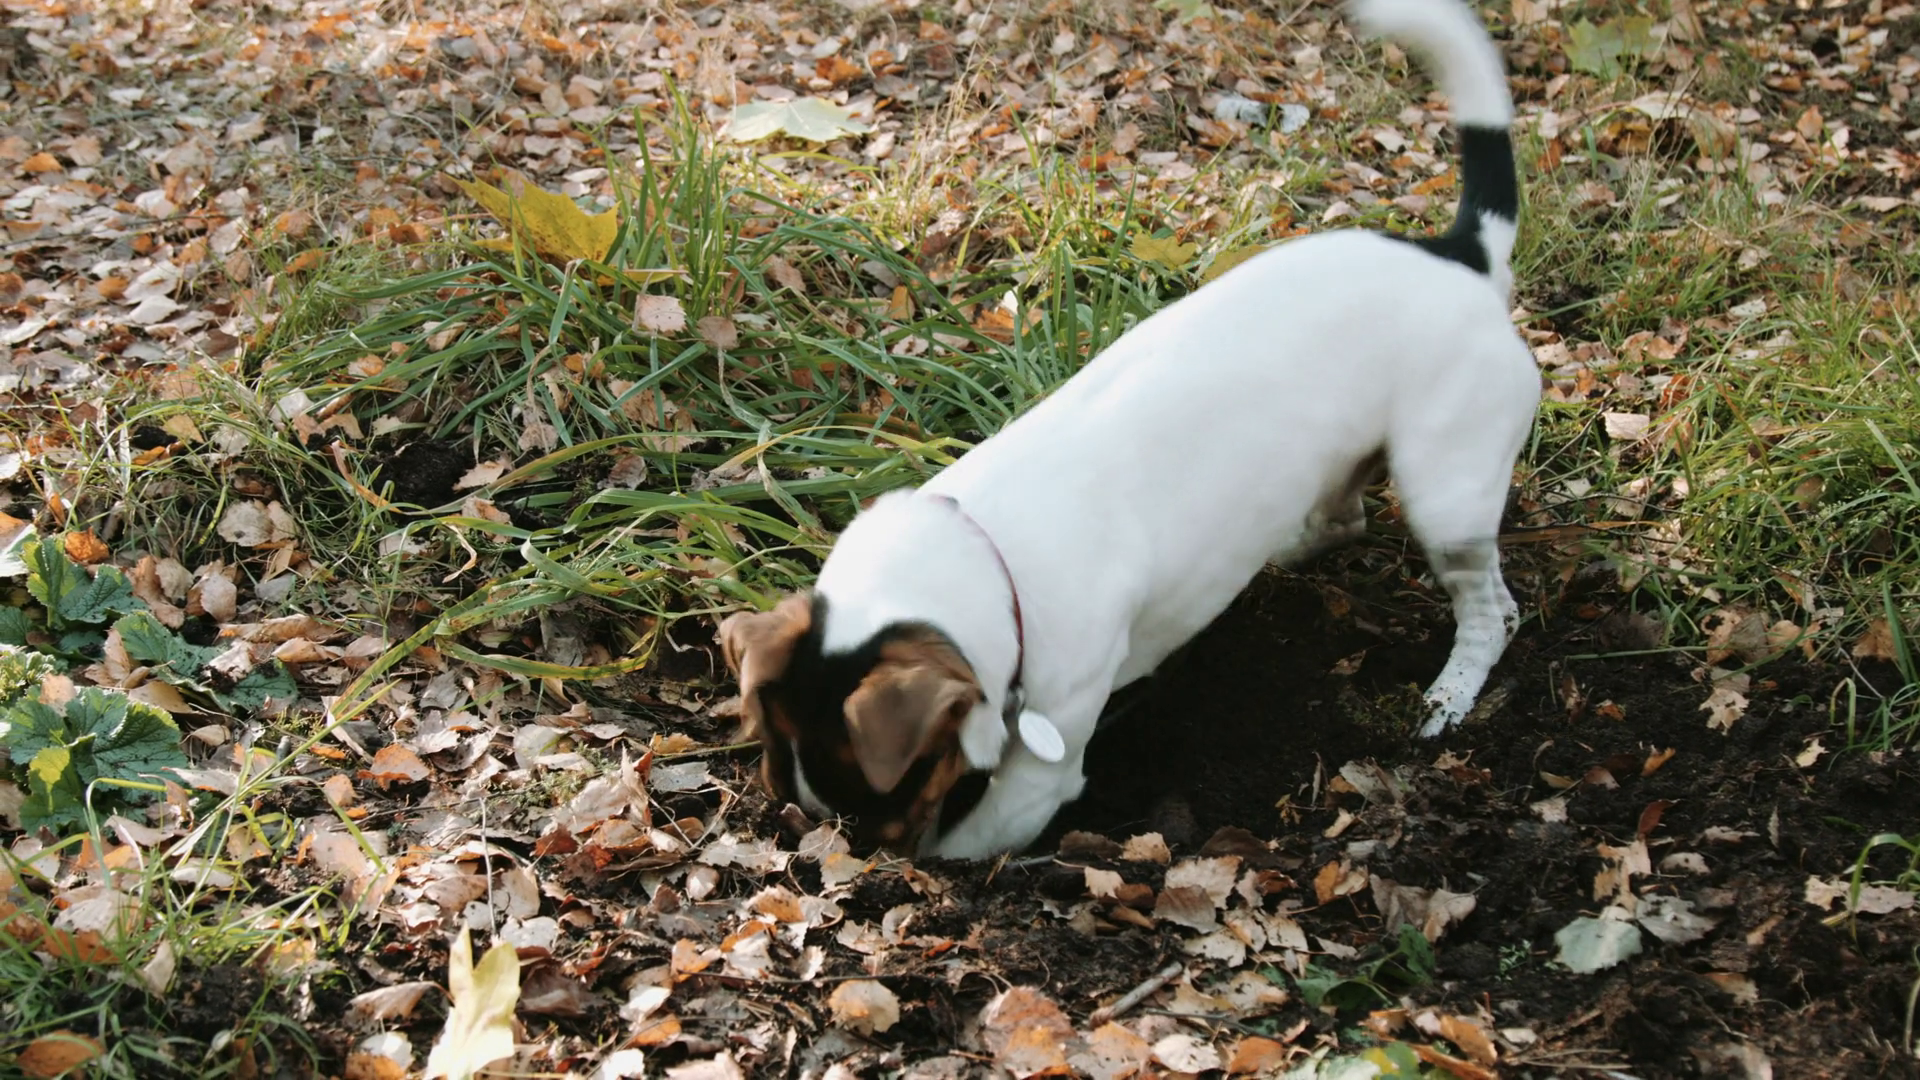 Image result for dog breed jack russell owner digging